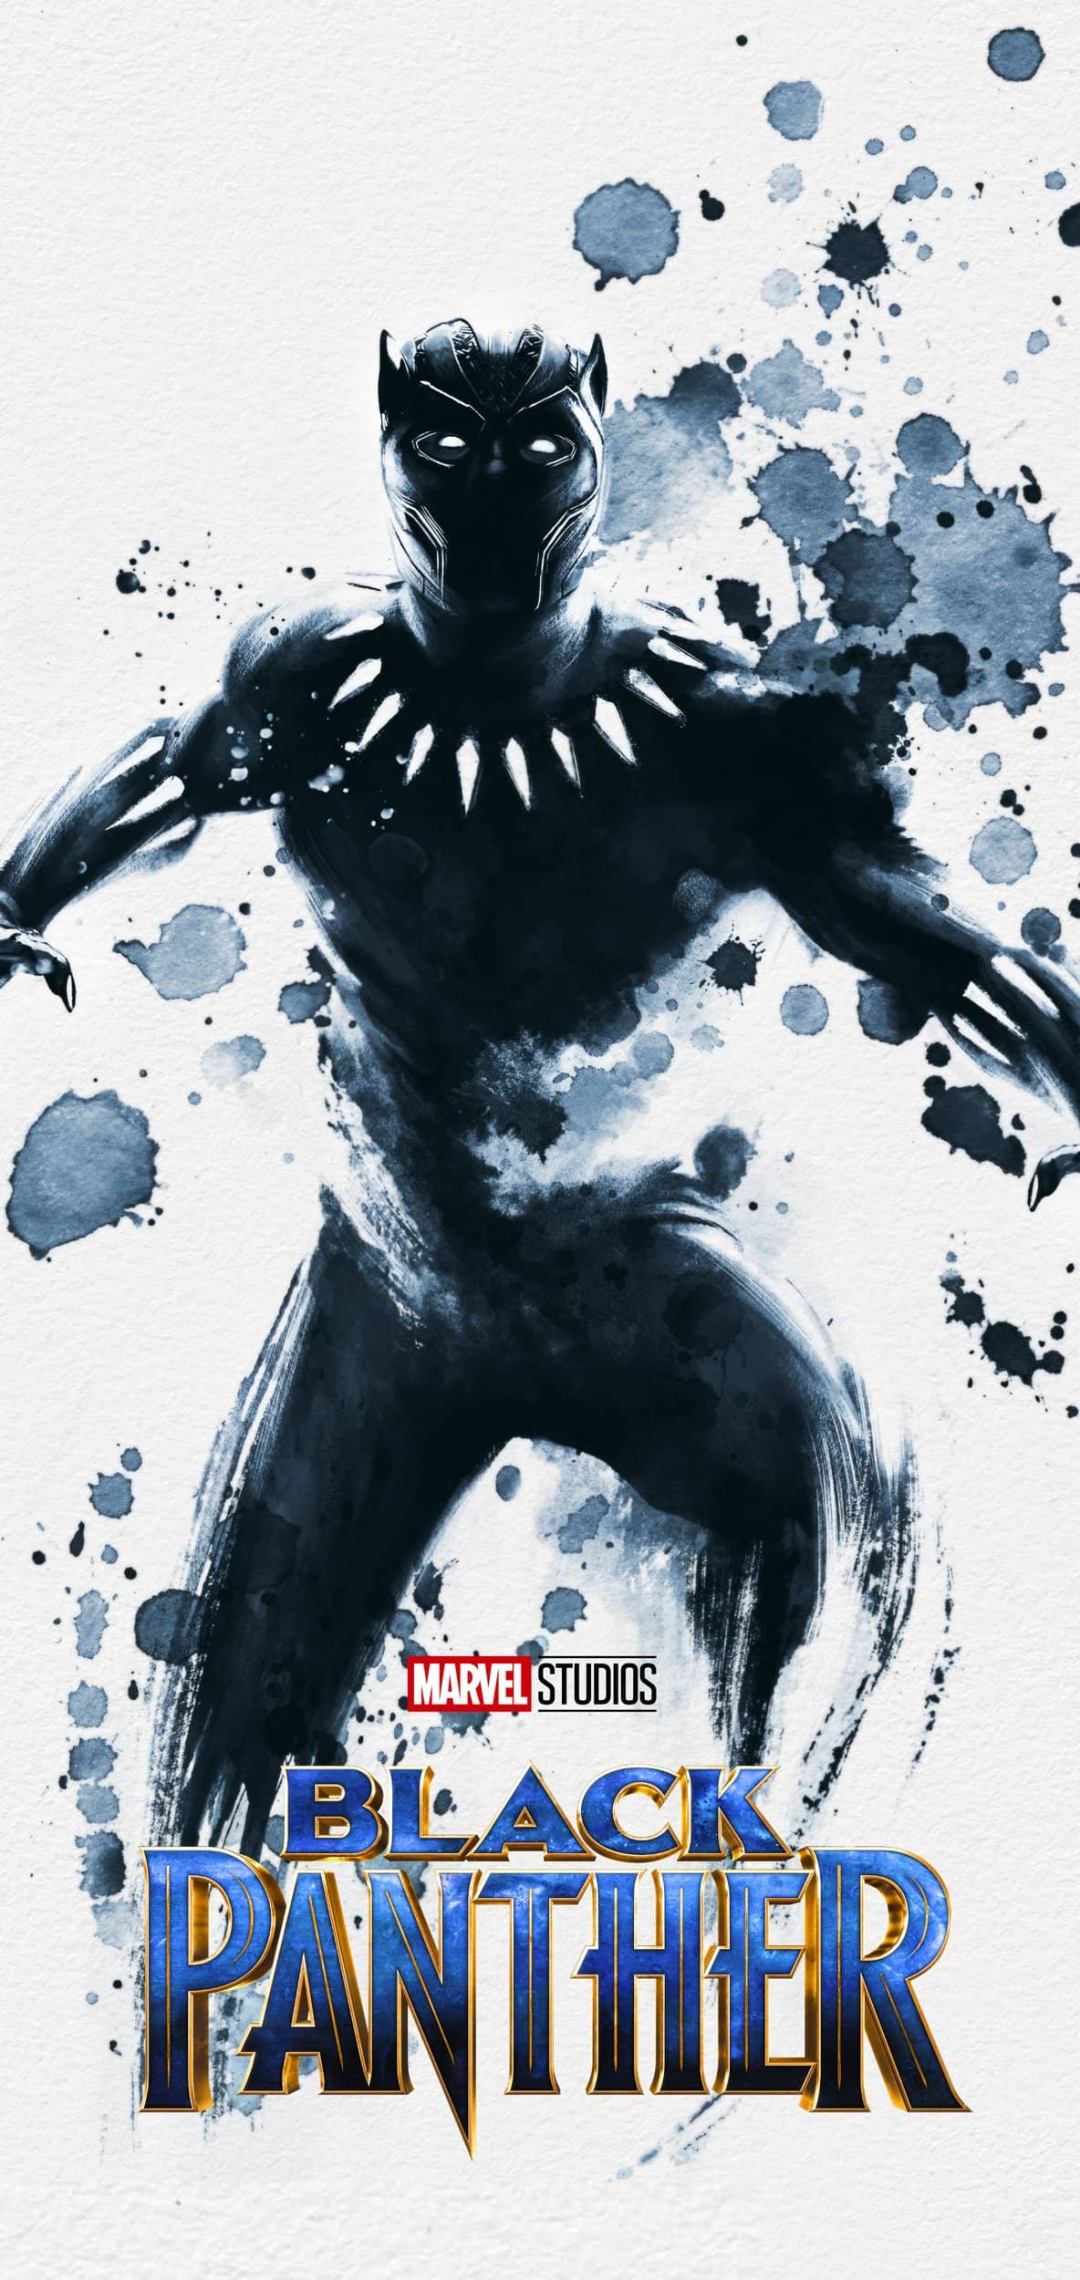 Mcu Black Panther Poster - HD Wallpaper 